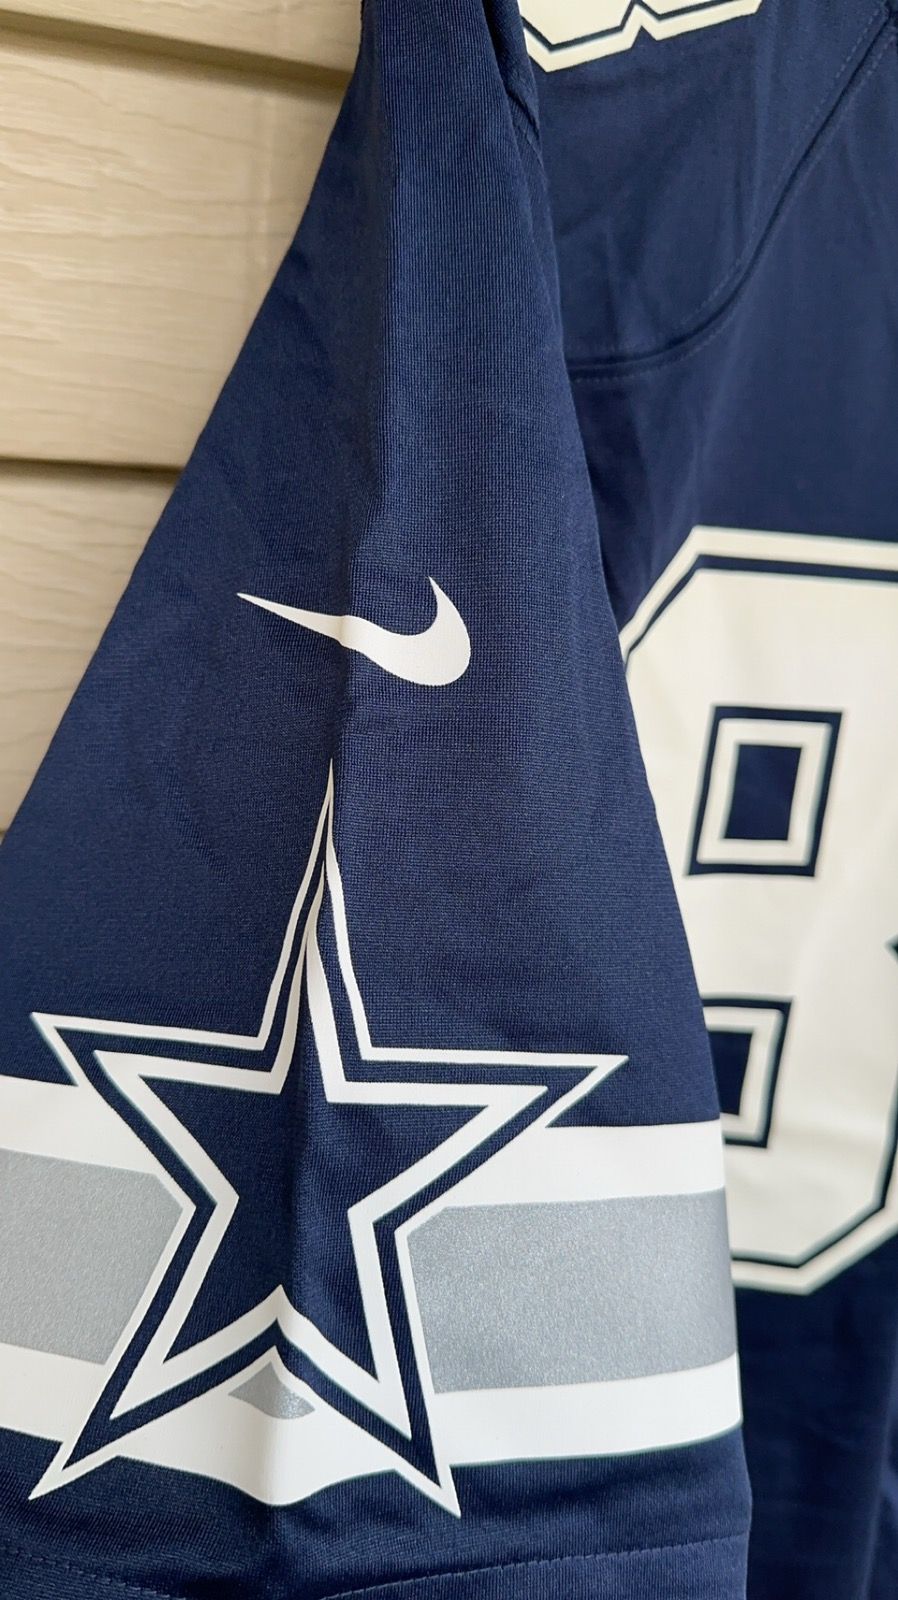 Nike Nike CeeDee Lamb Dallas Cowboys NFL Jersey Men’s XL Blue Size US XL / EU 56 / 4 - 5 Thumbnail